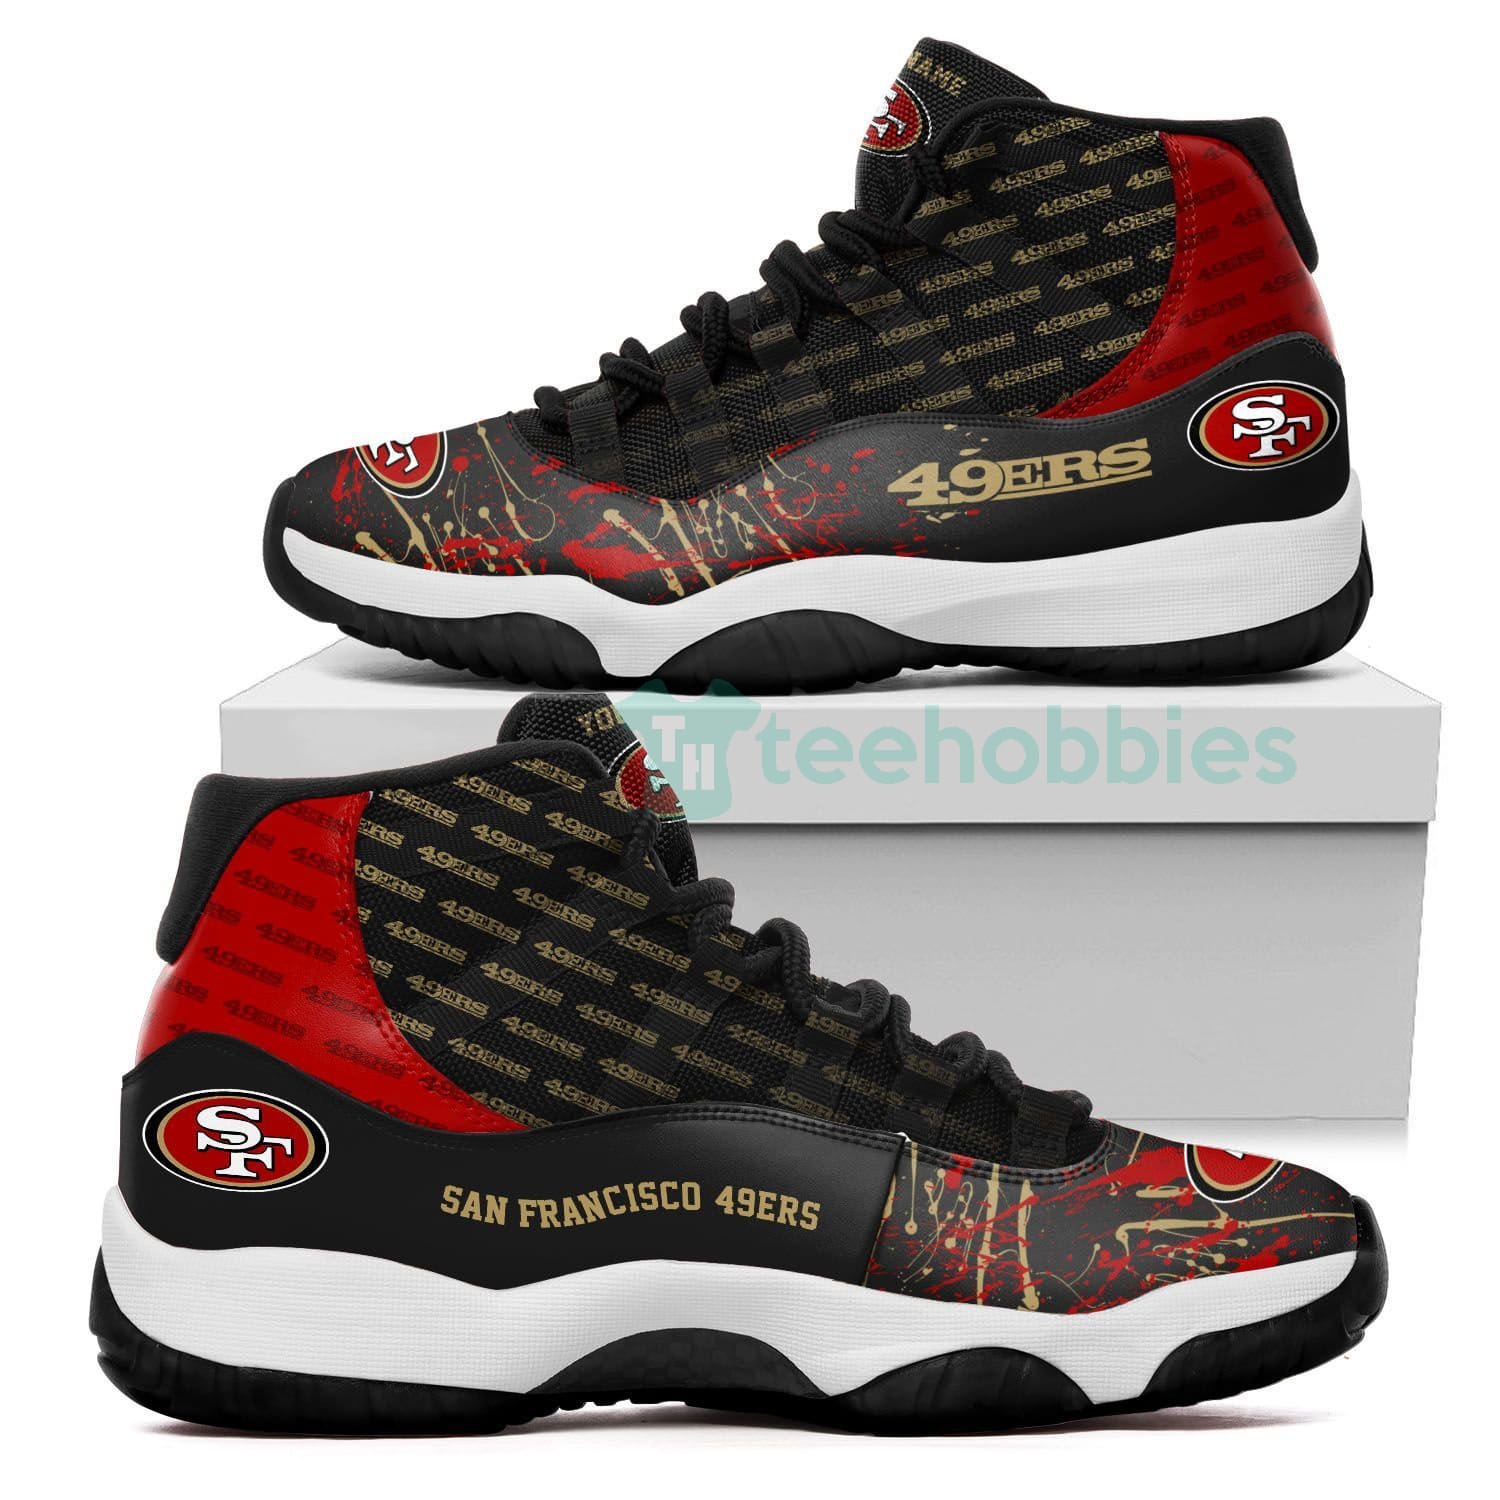 San Francisco 49ers Customized New Air Jordan 11 Shoes